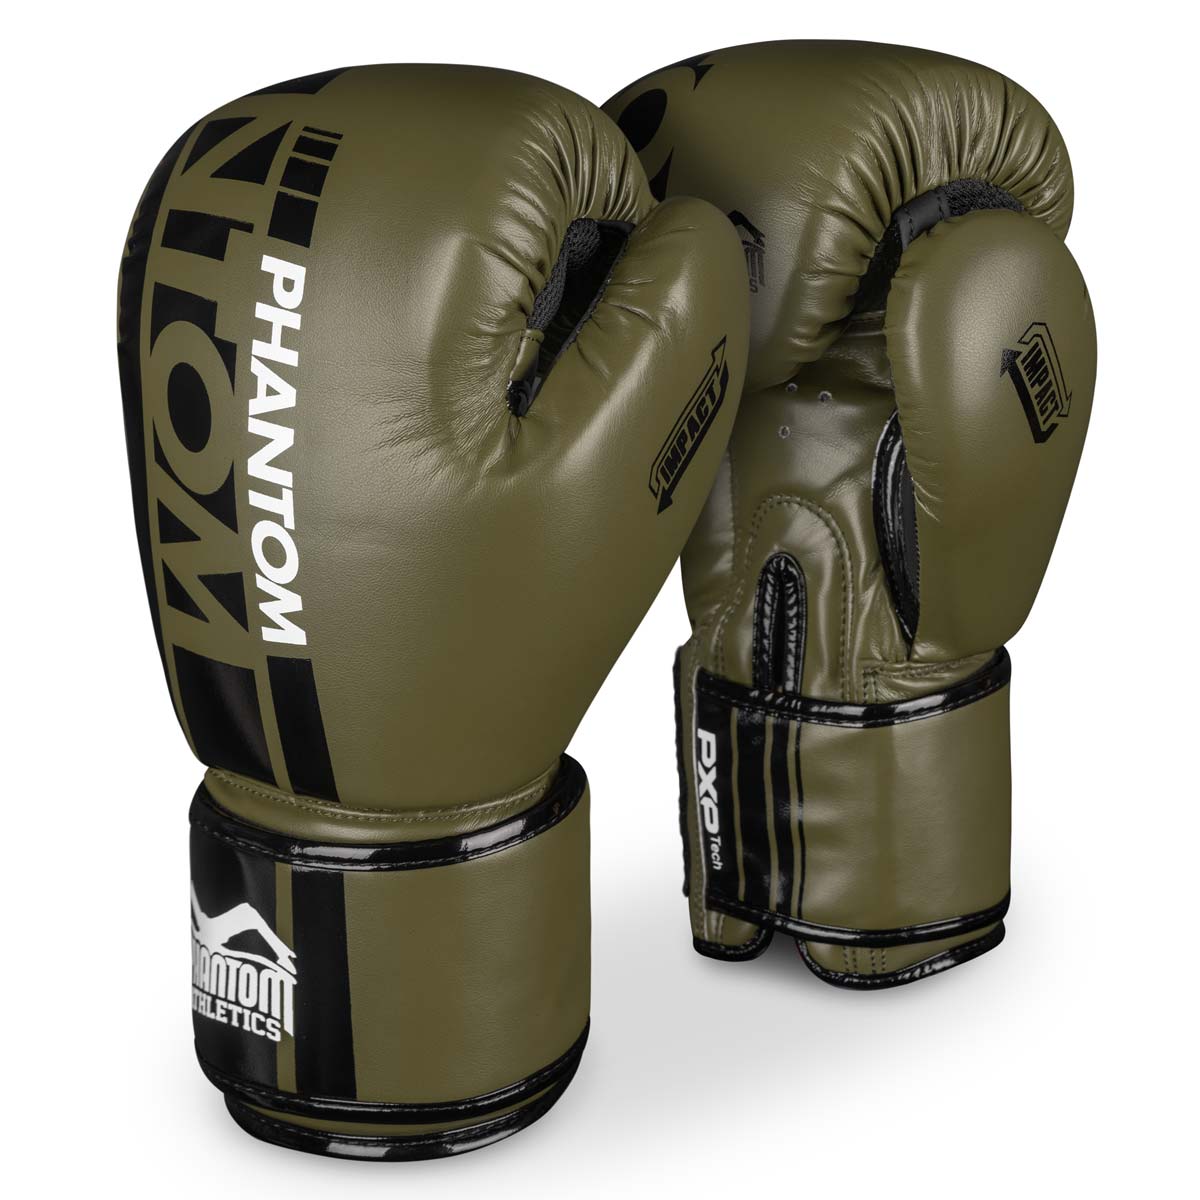 Phantom Boxhandschuhe APEX  Army Grün für Kampfsport Training